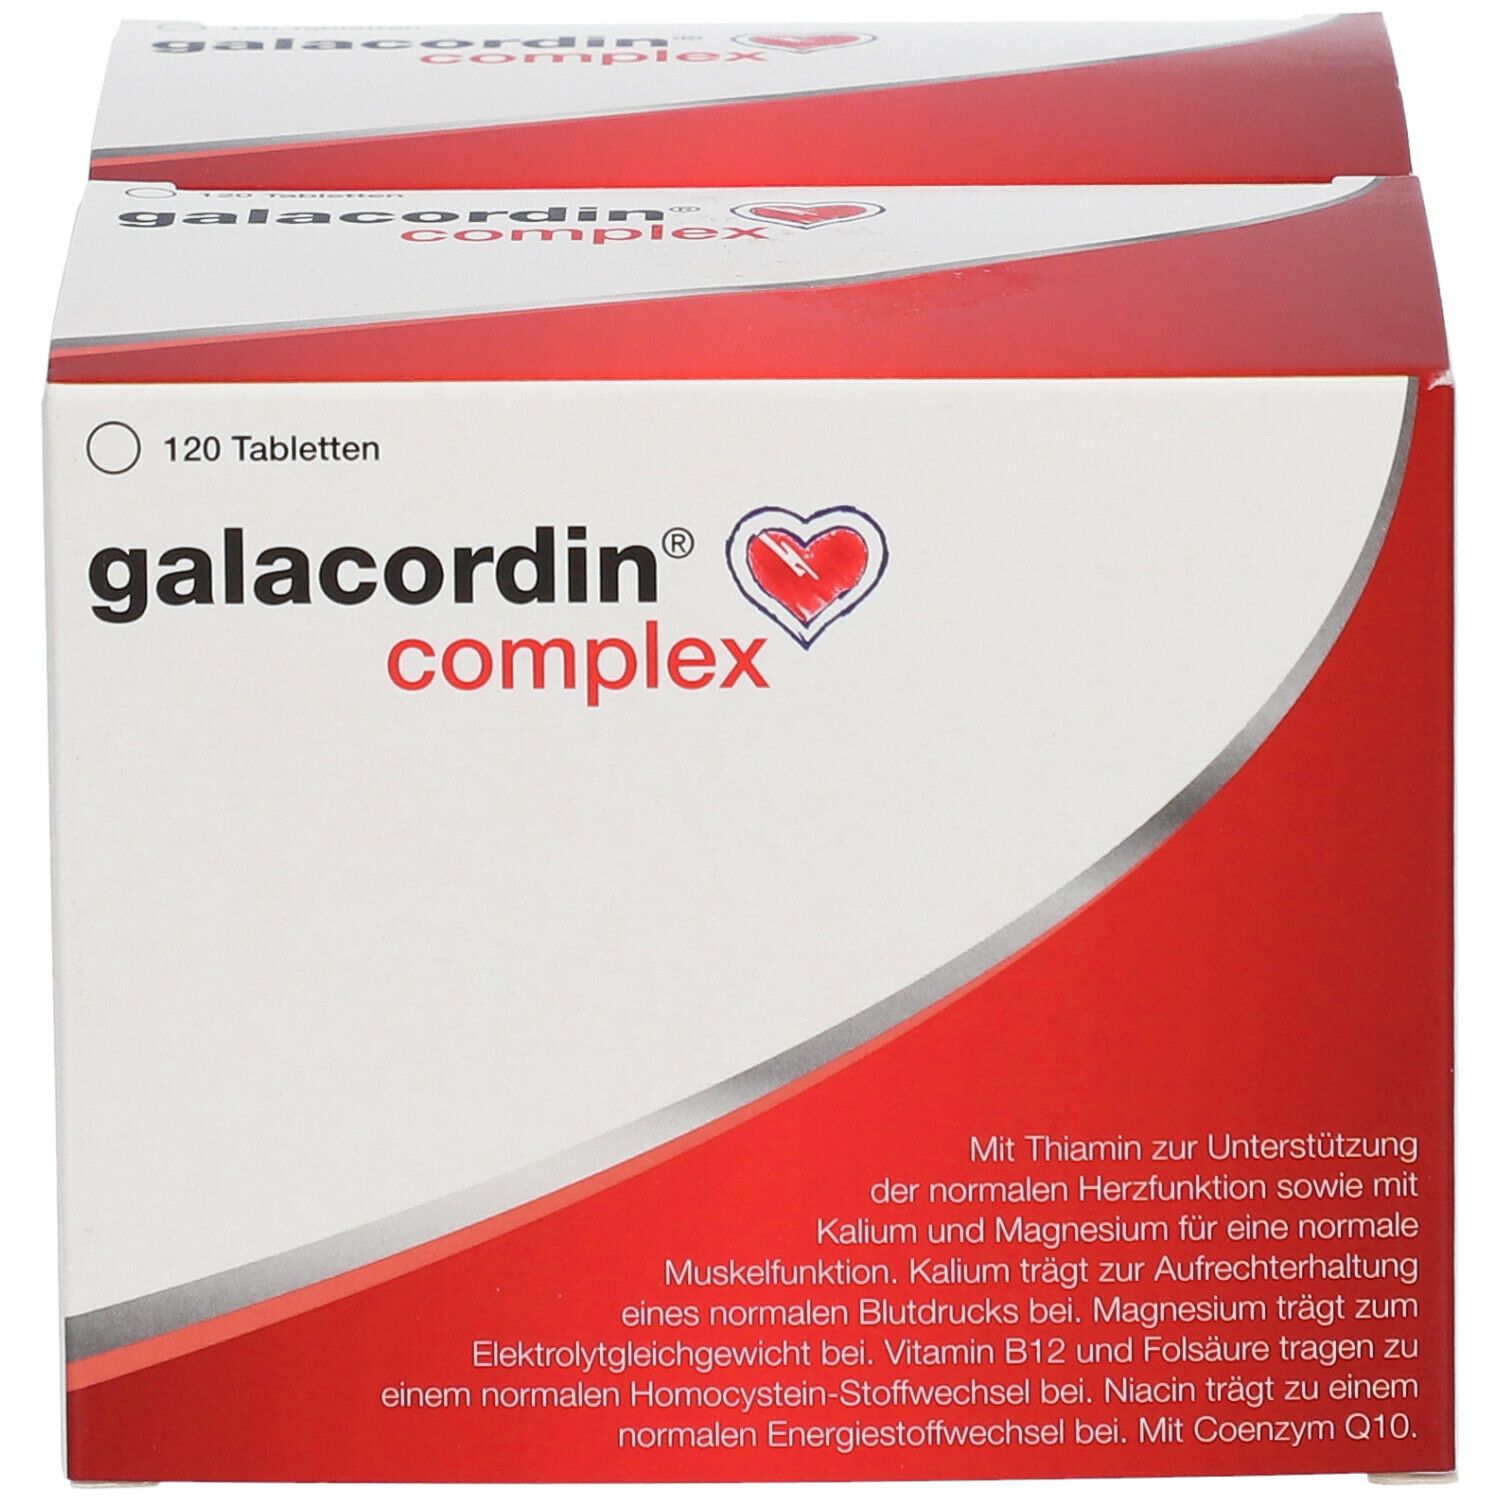 galacordin® complex